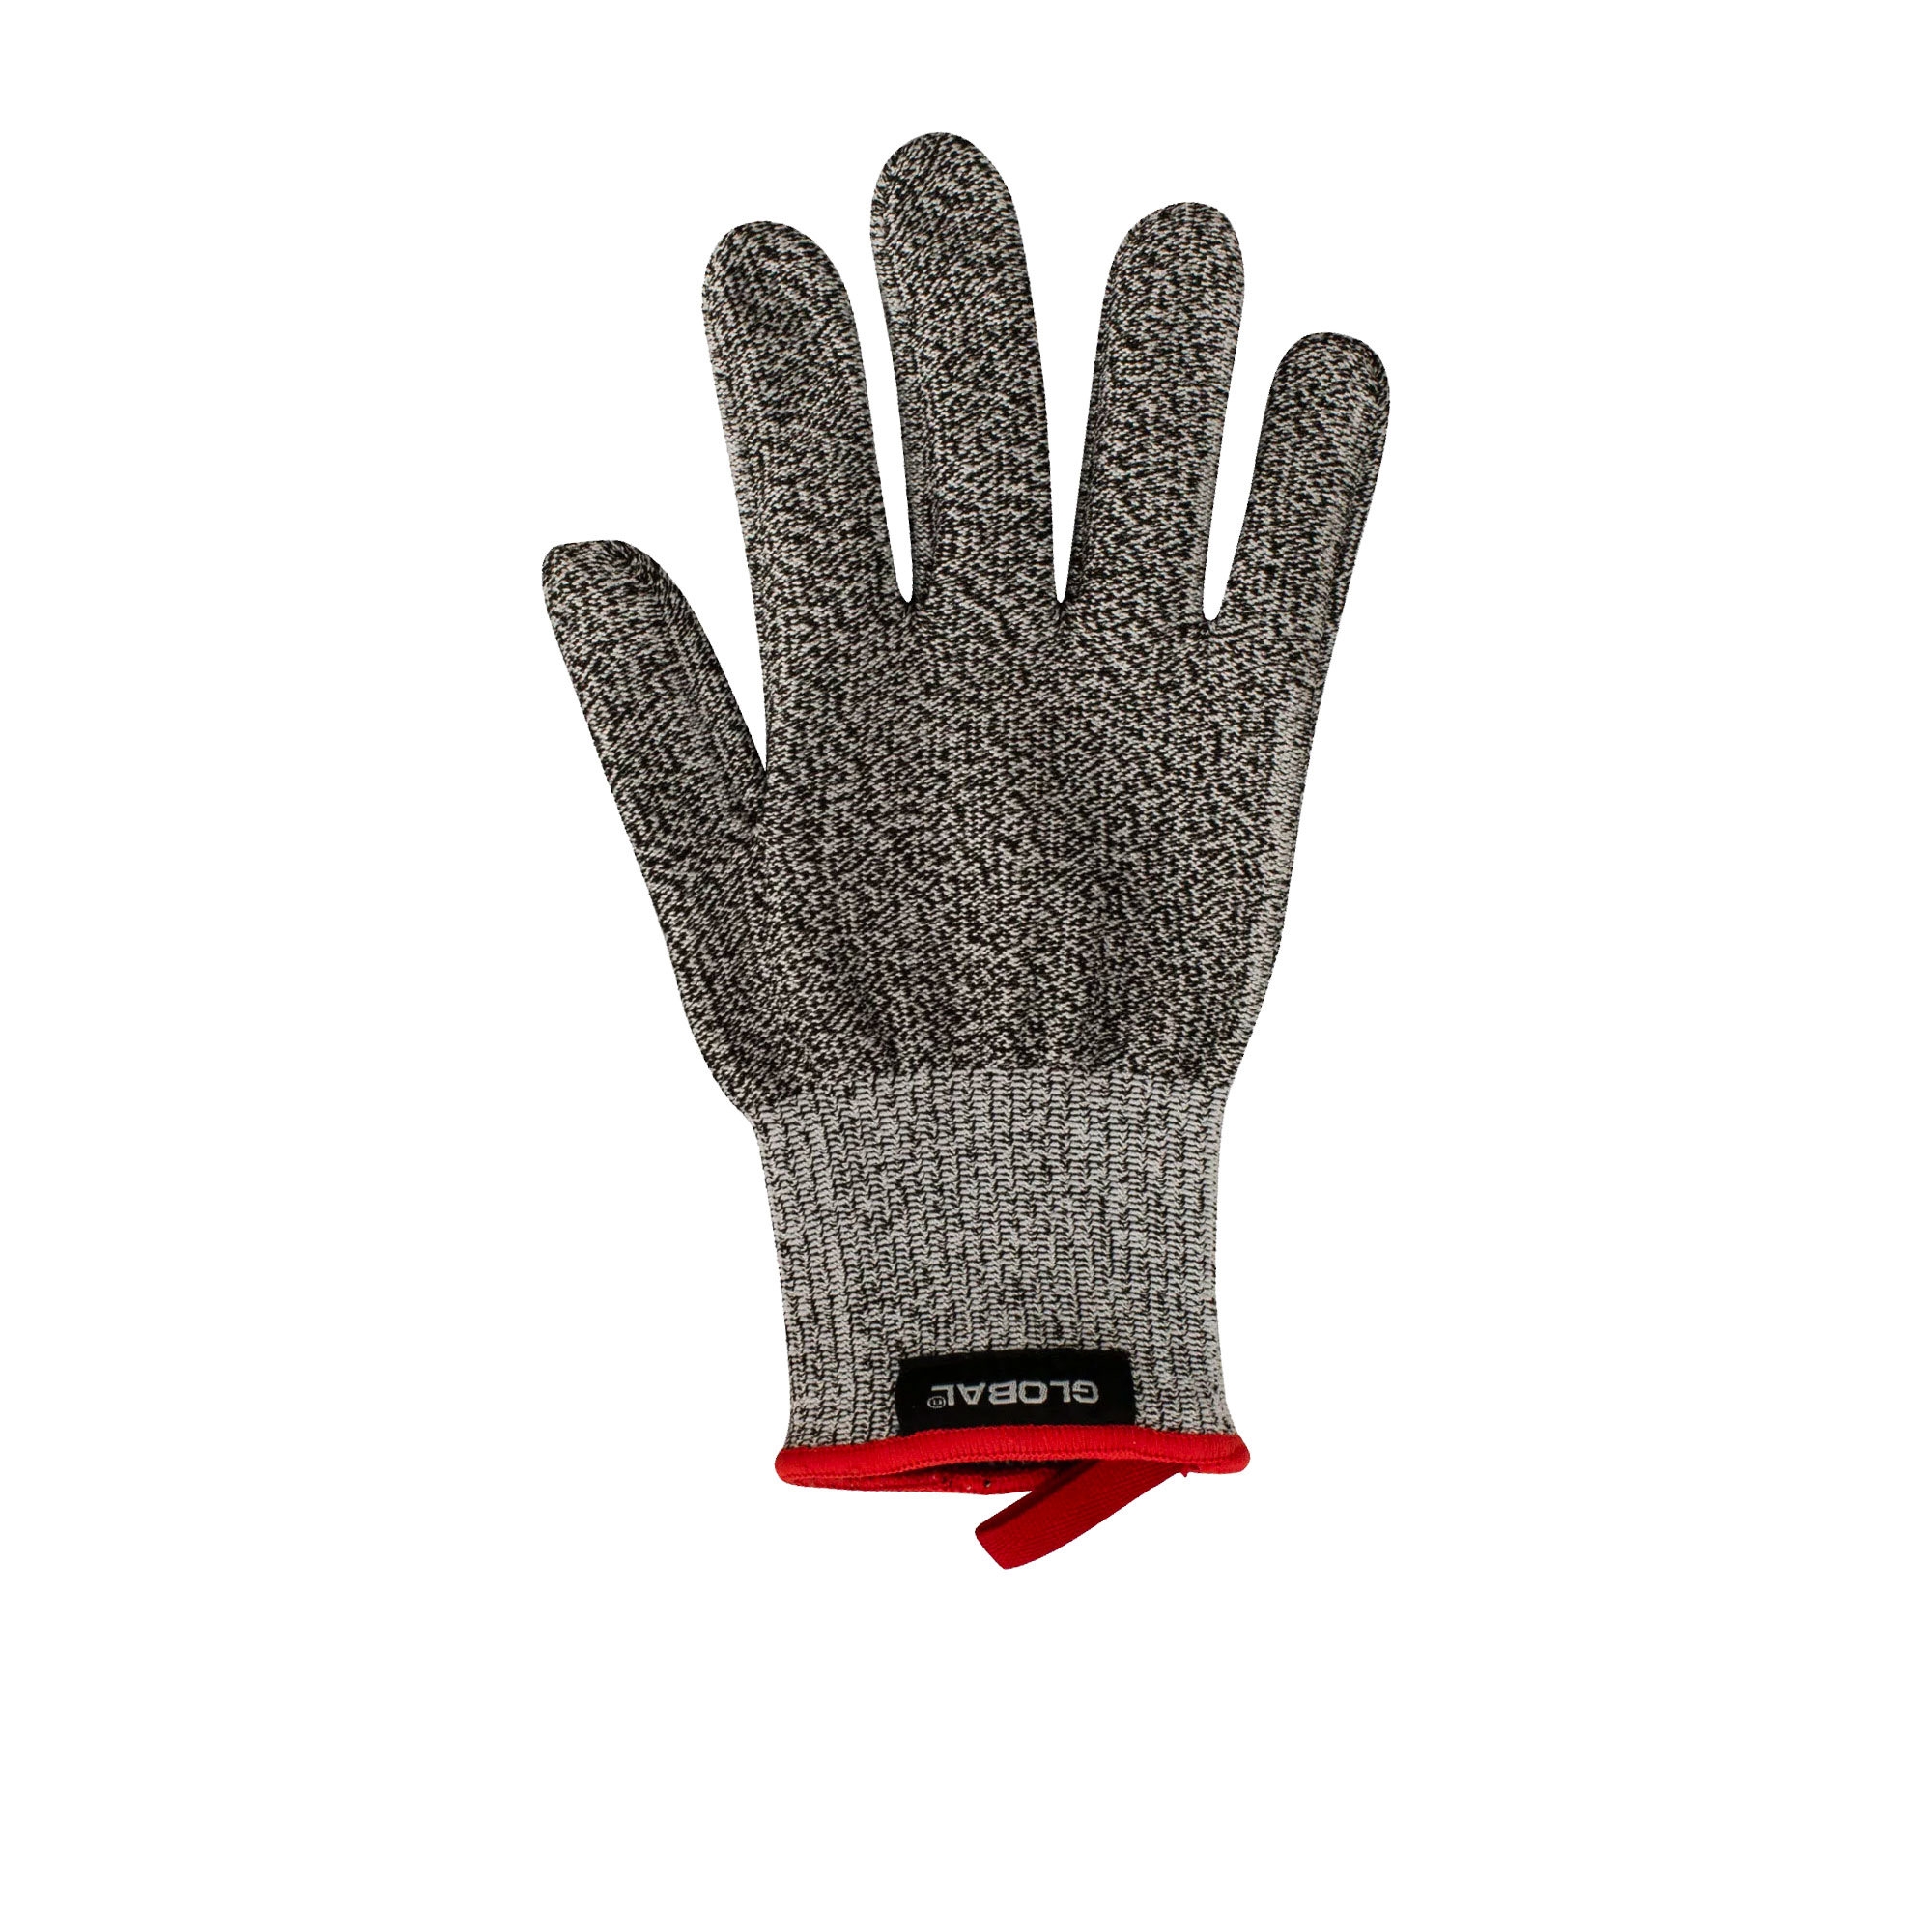 Global Cut Resistant Gloves Grey Image 1